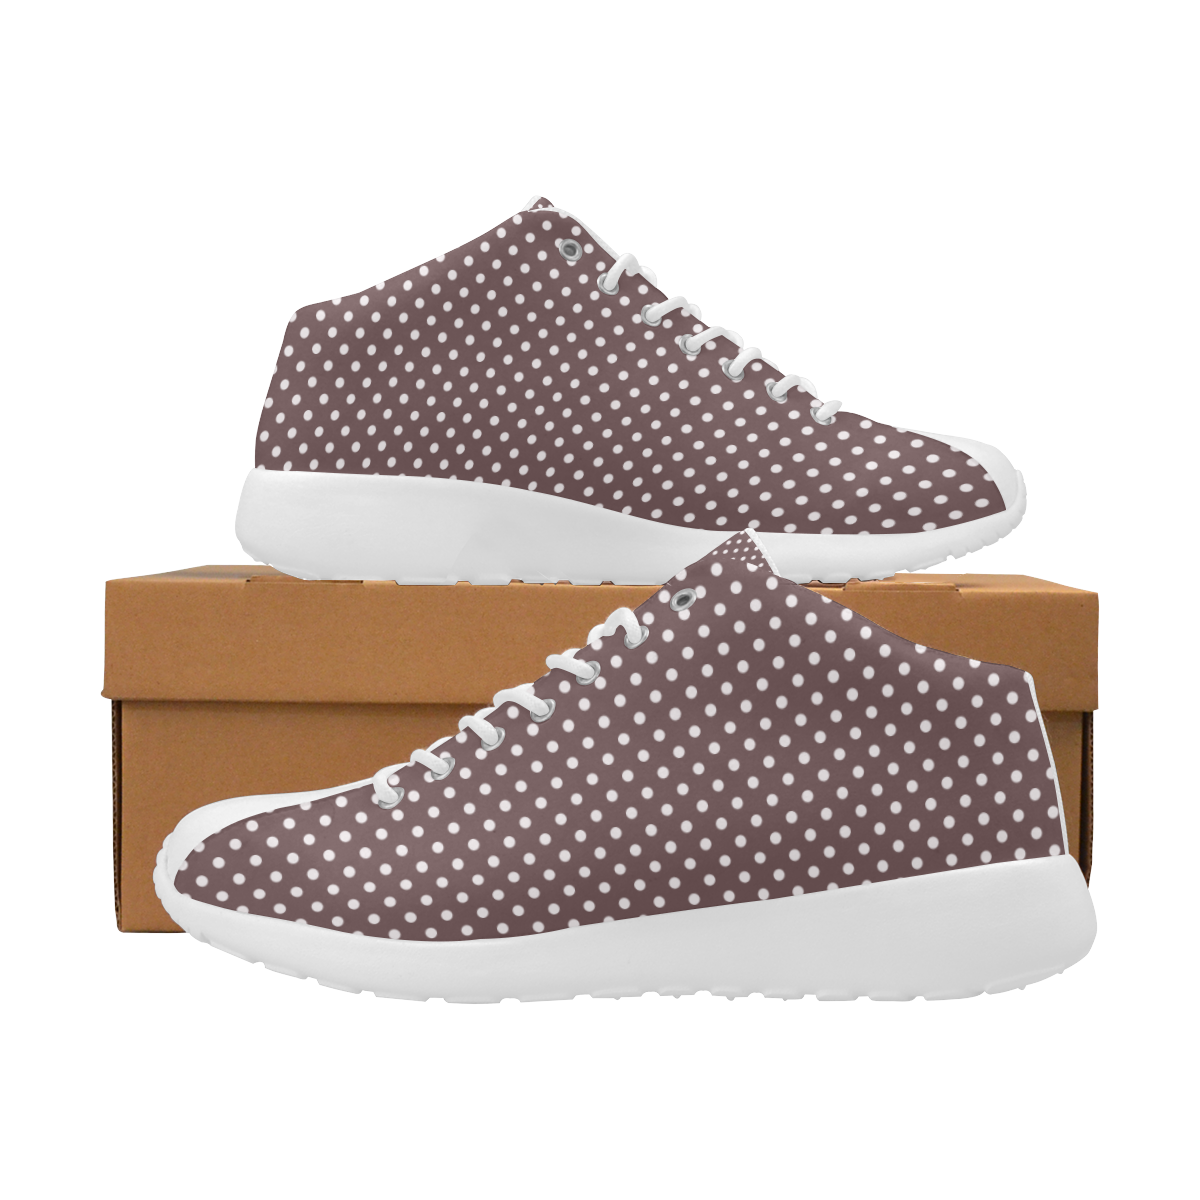 Chocolate brown polka dots Women's Basketball Training Shoes (Model 47502)